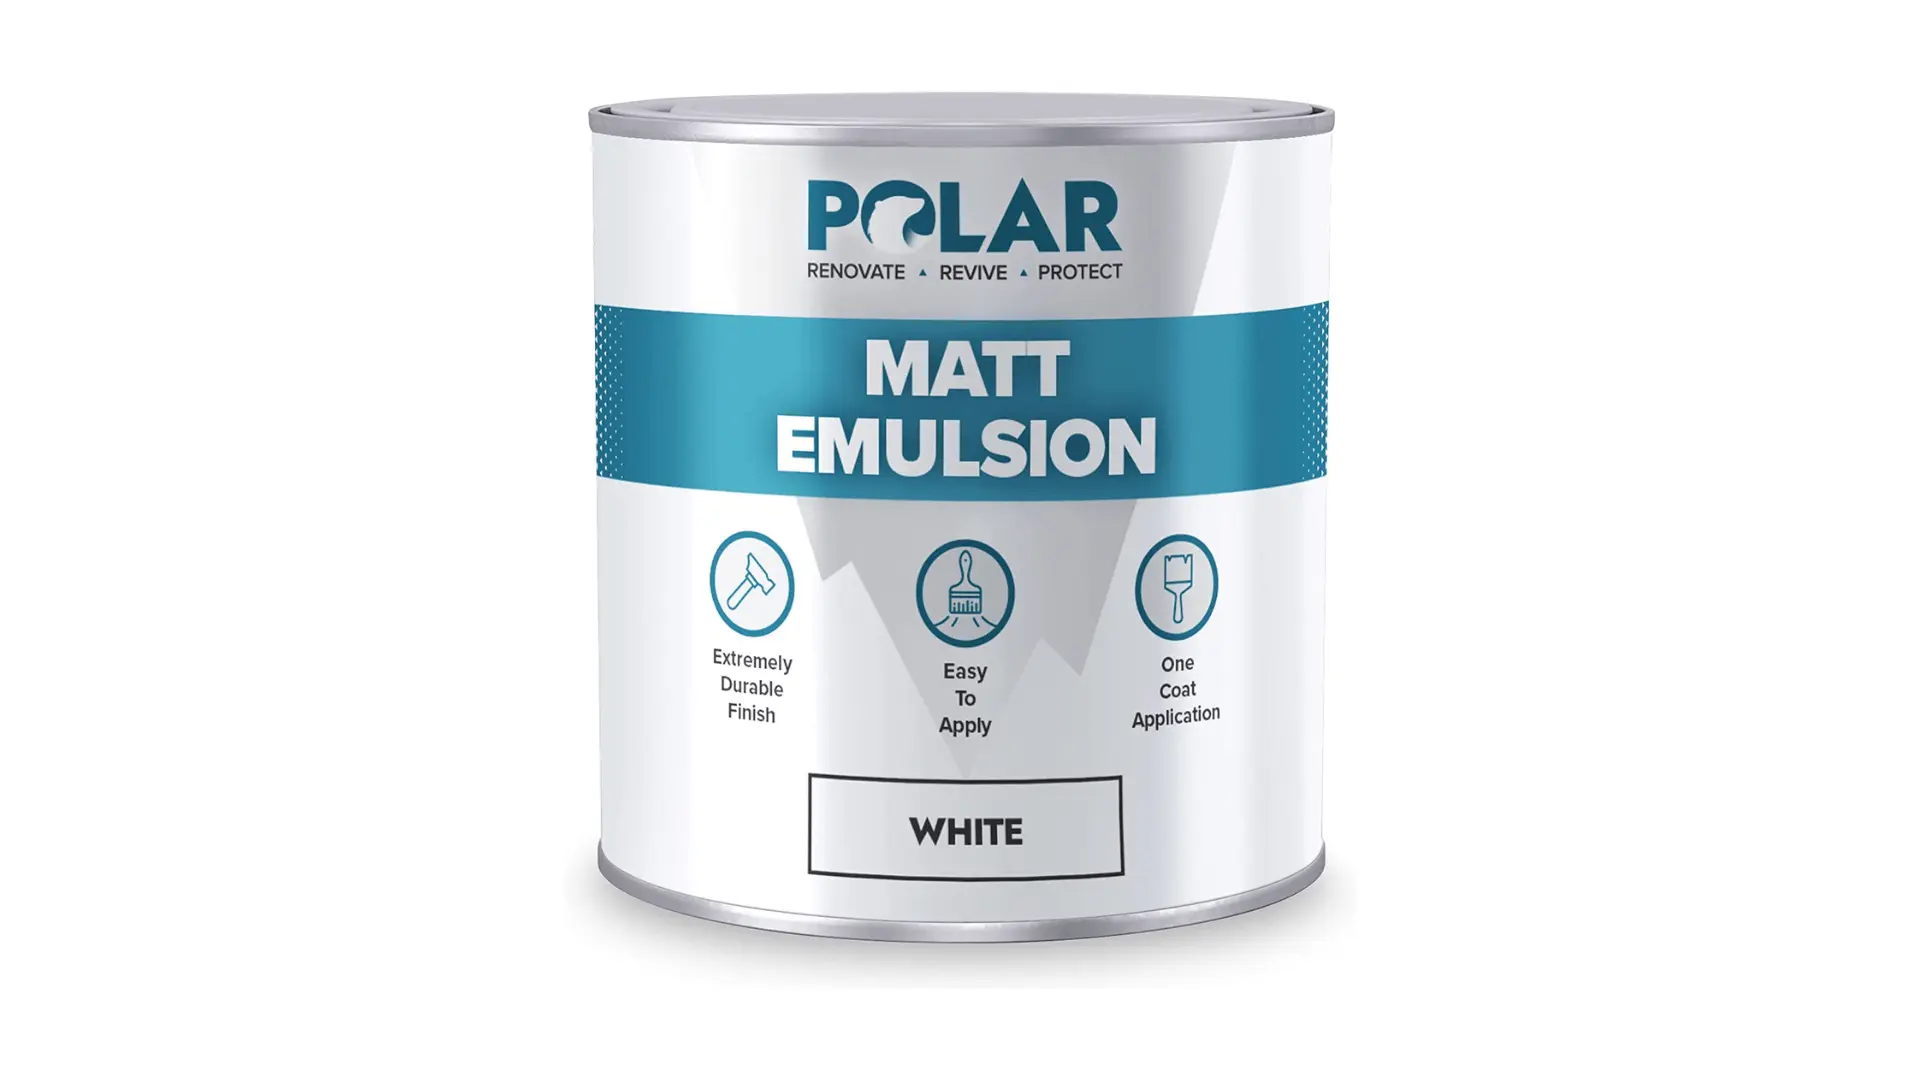 Dulux Easycare Brilliant white Matt Emulsion paint, 10L